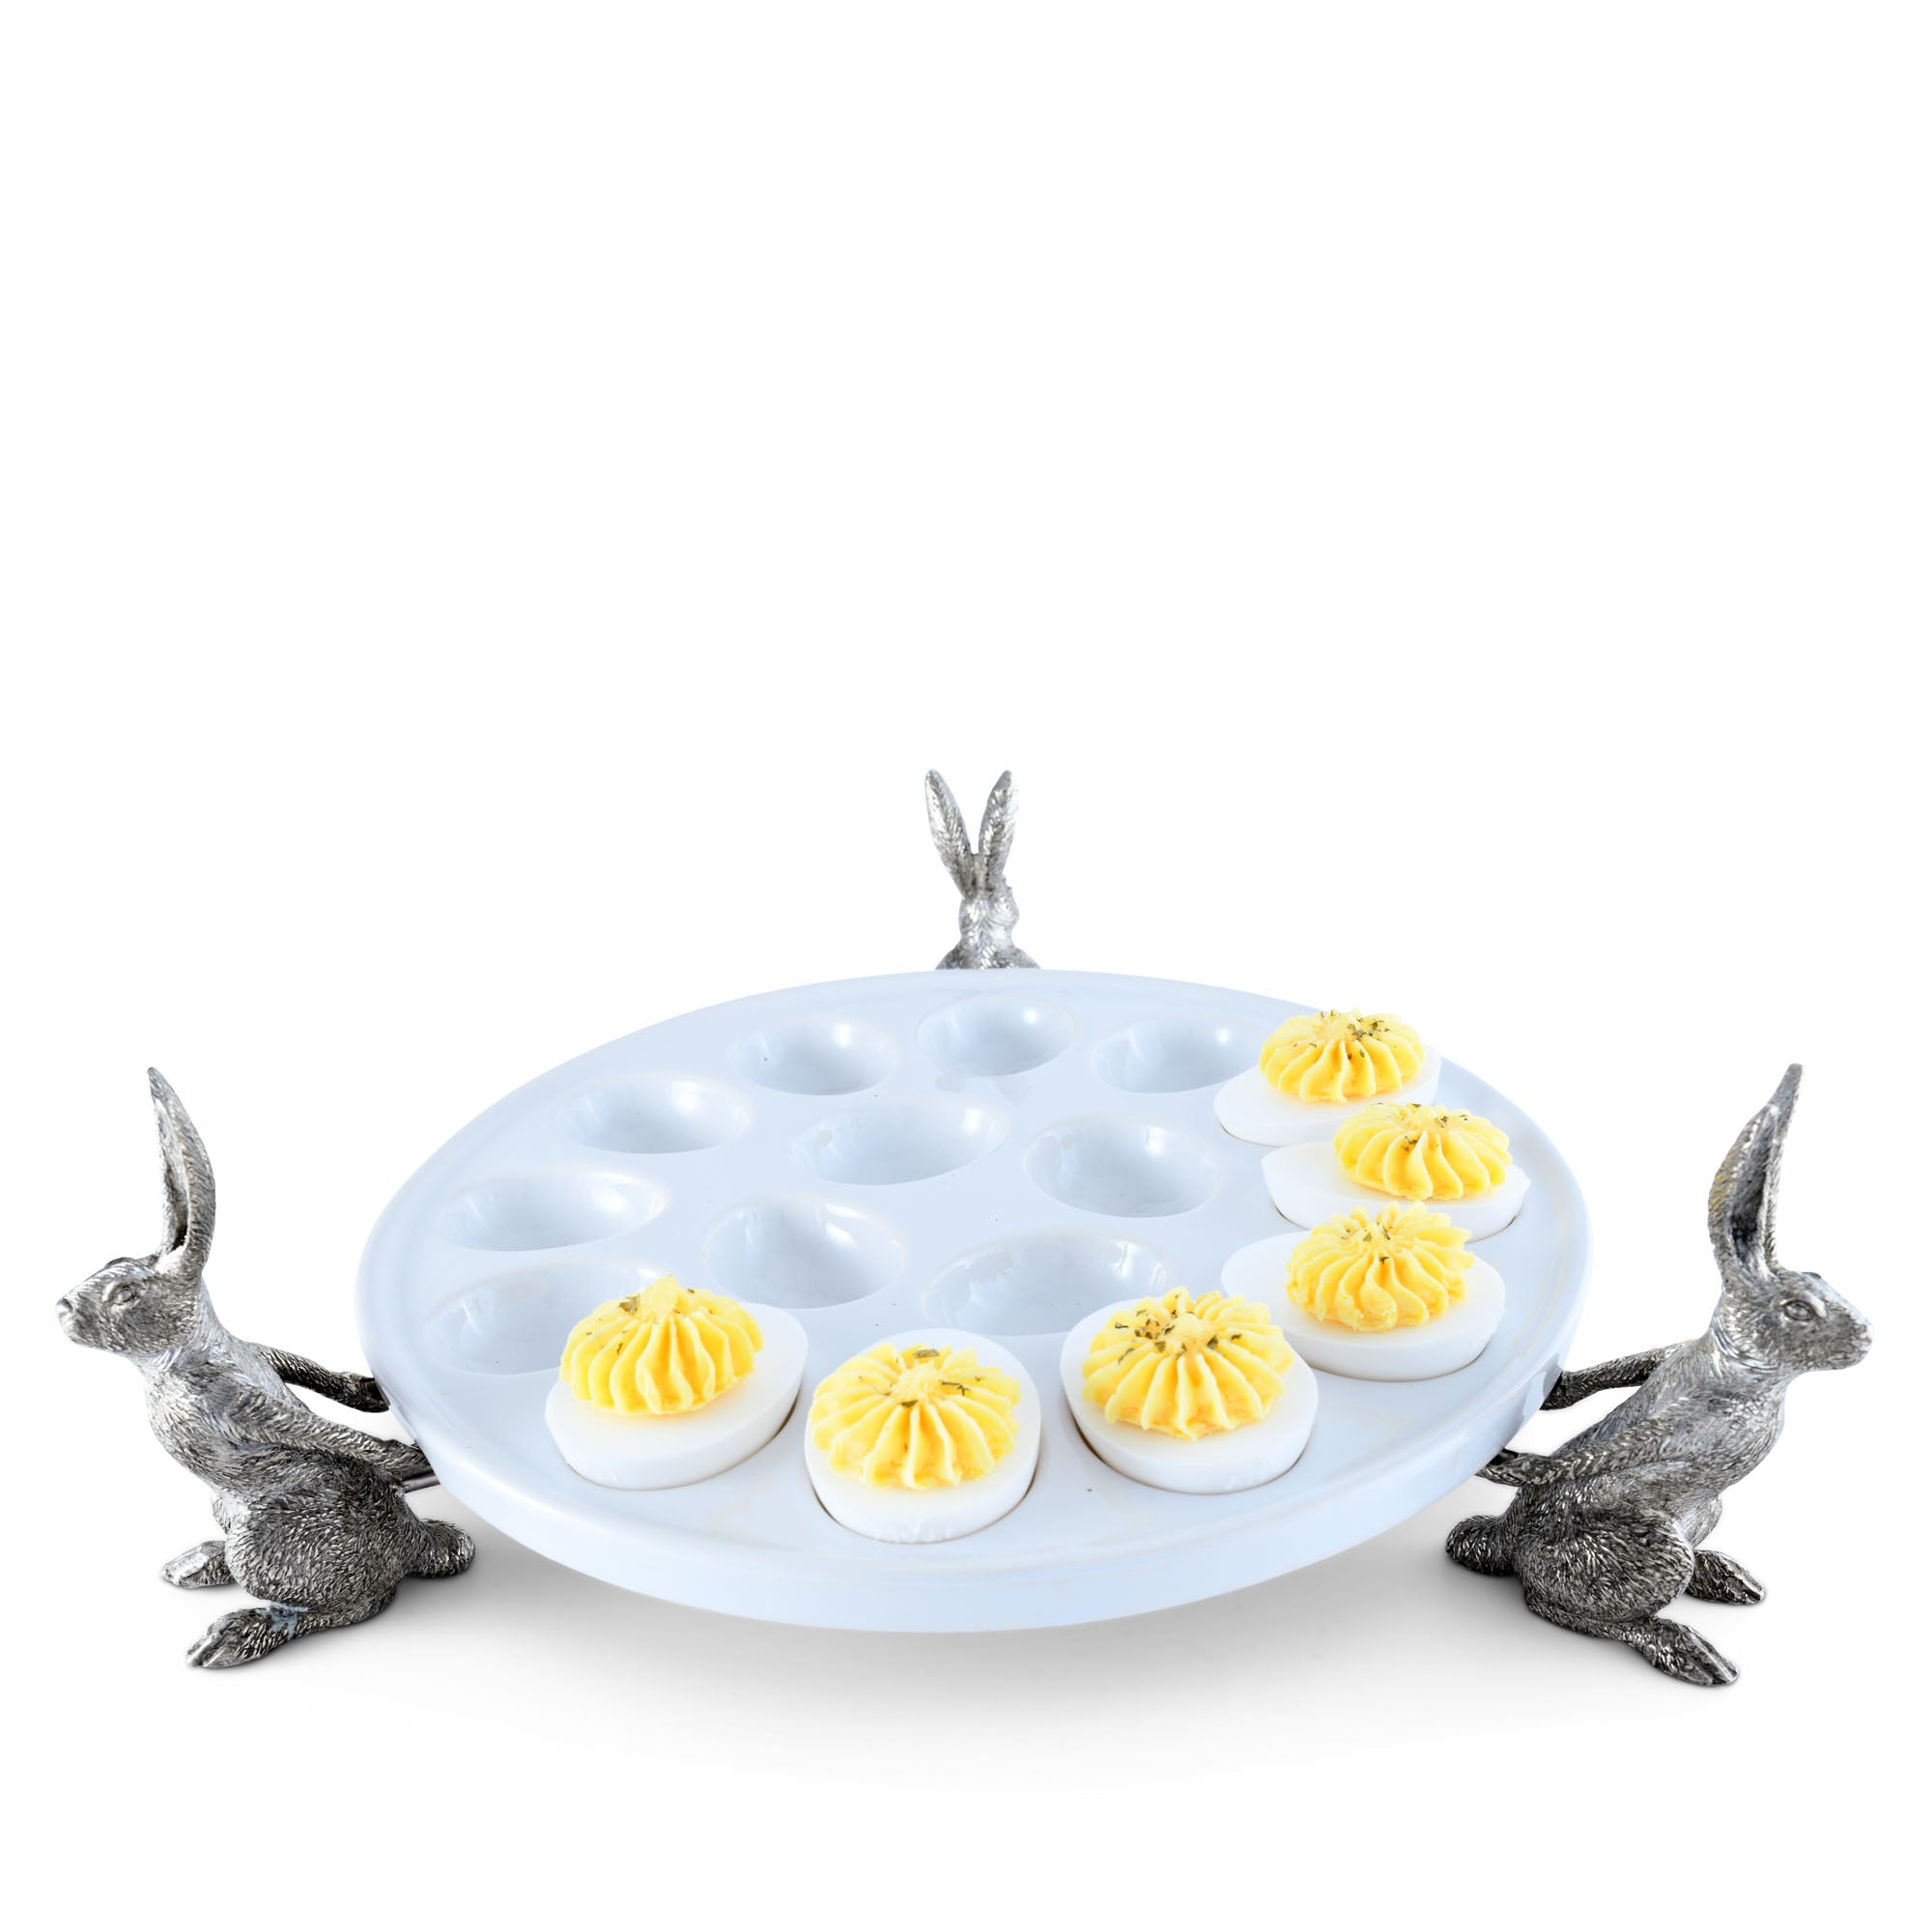 Vagabond House Rabbit Deviled Egg Holder Product Image